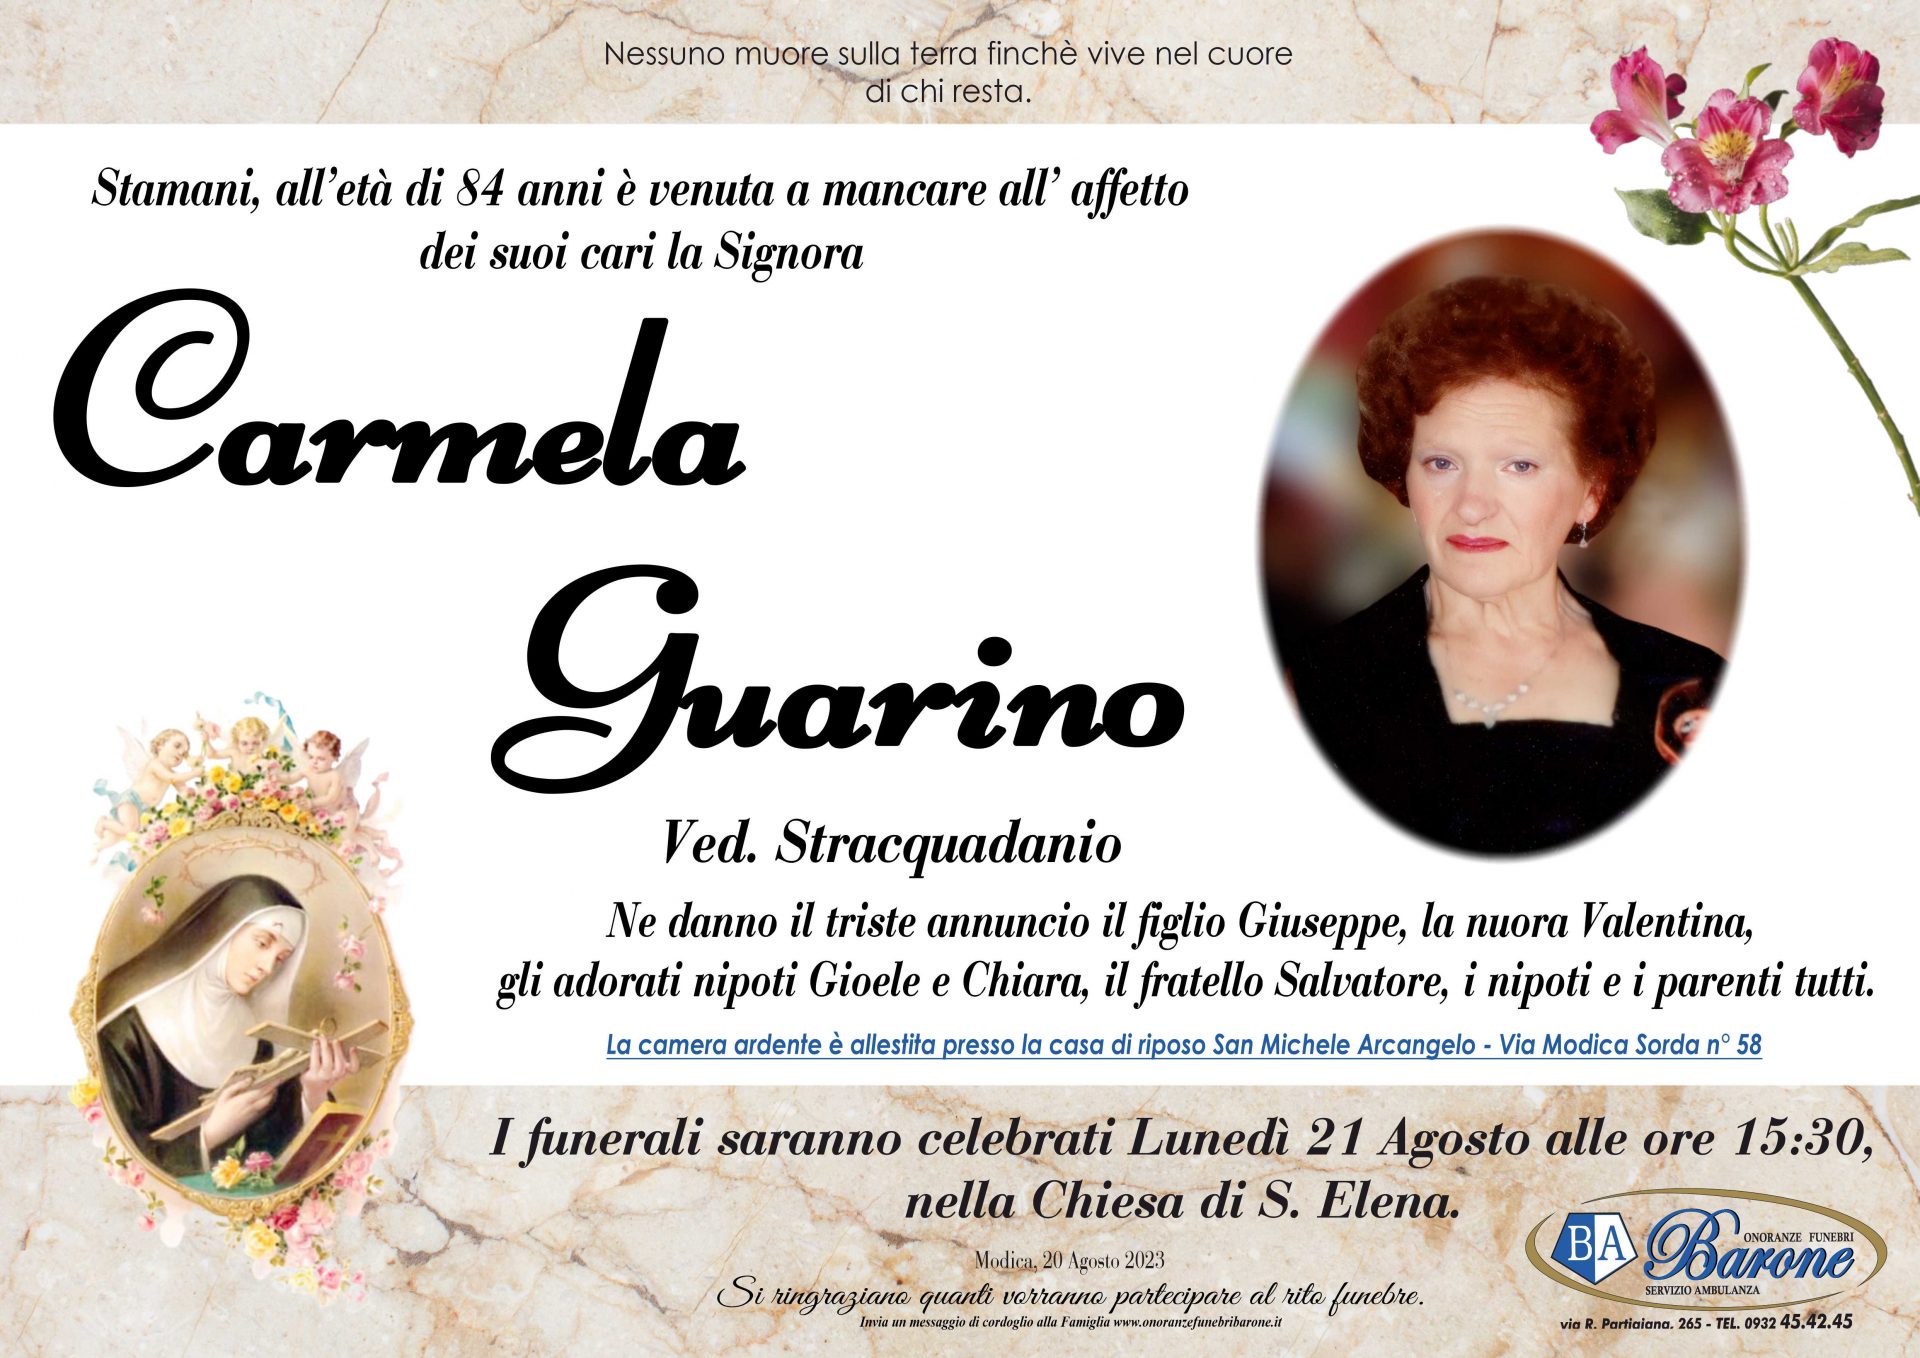 Carmela Guarino